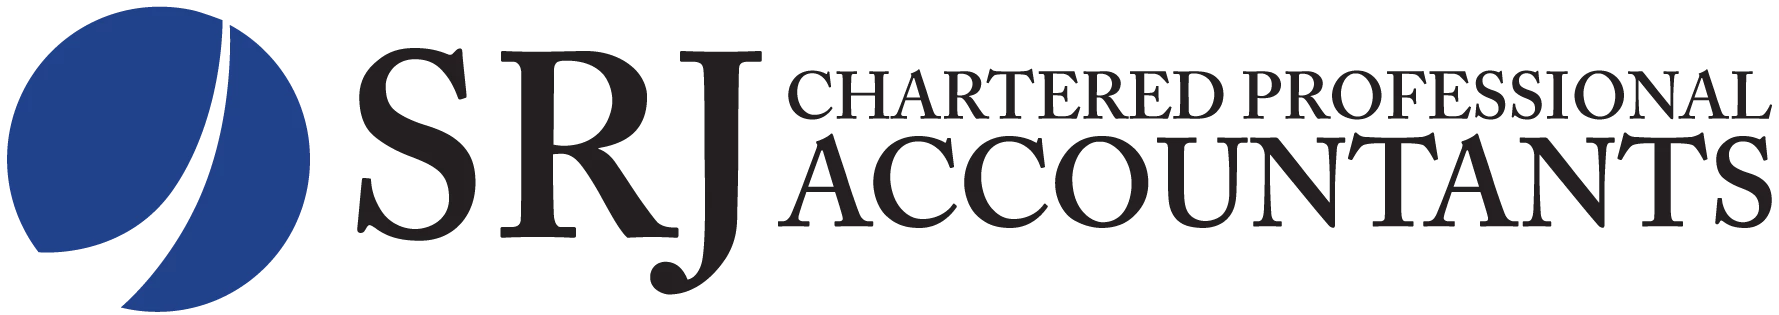 SRJ Chartered Professional Accountants